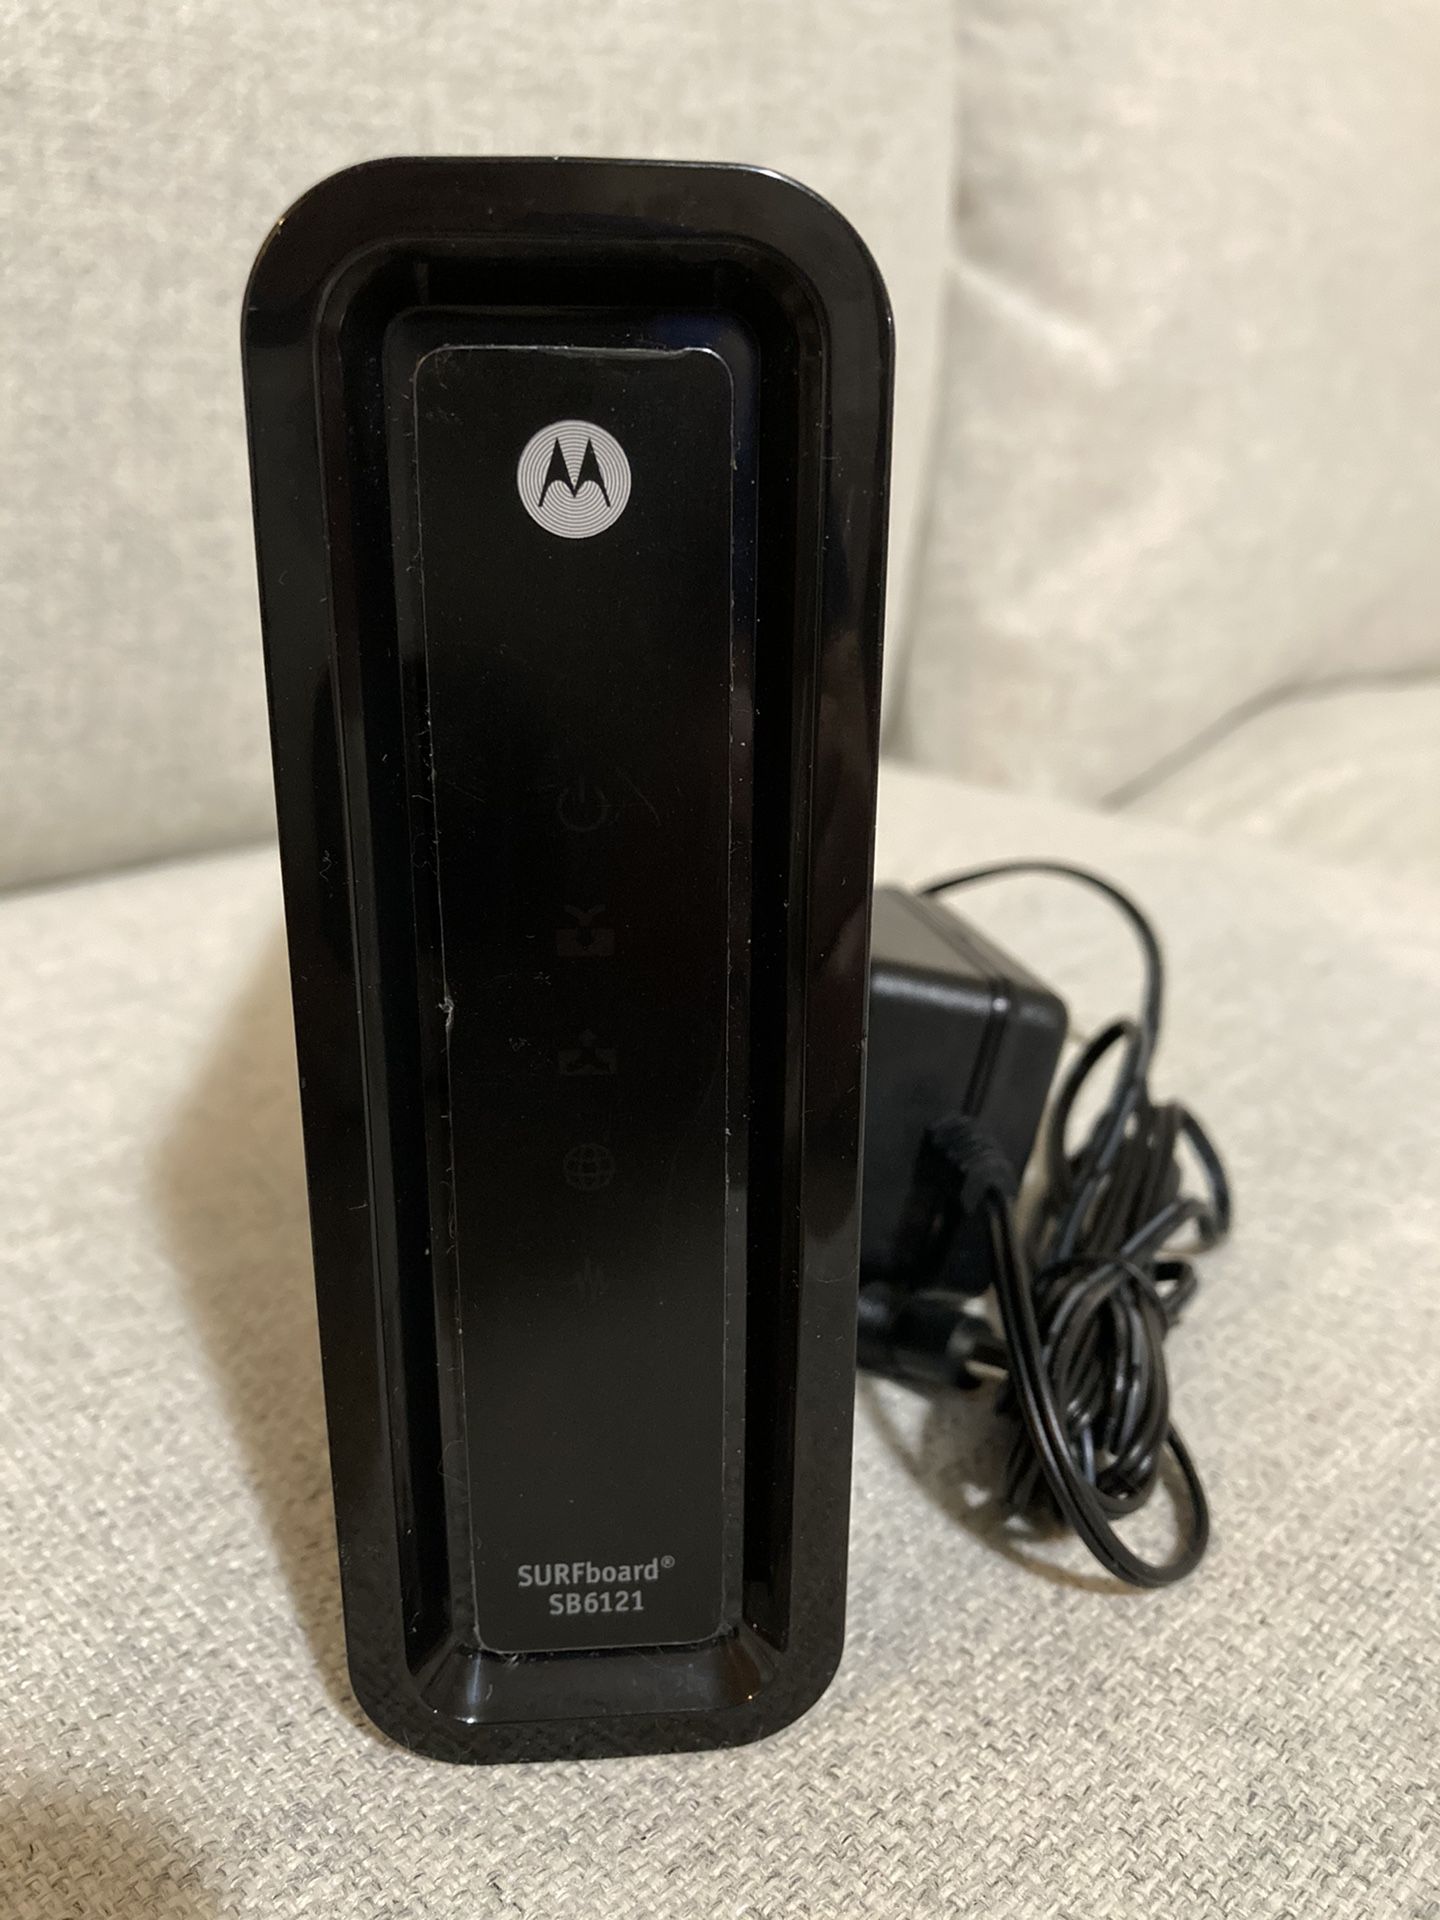 Modem Motorola surfboard sb6121